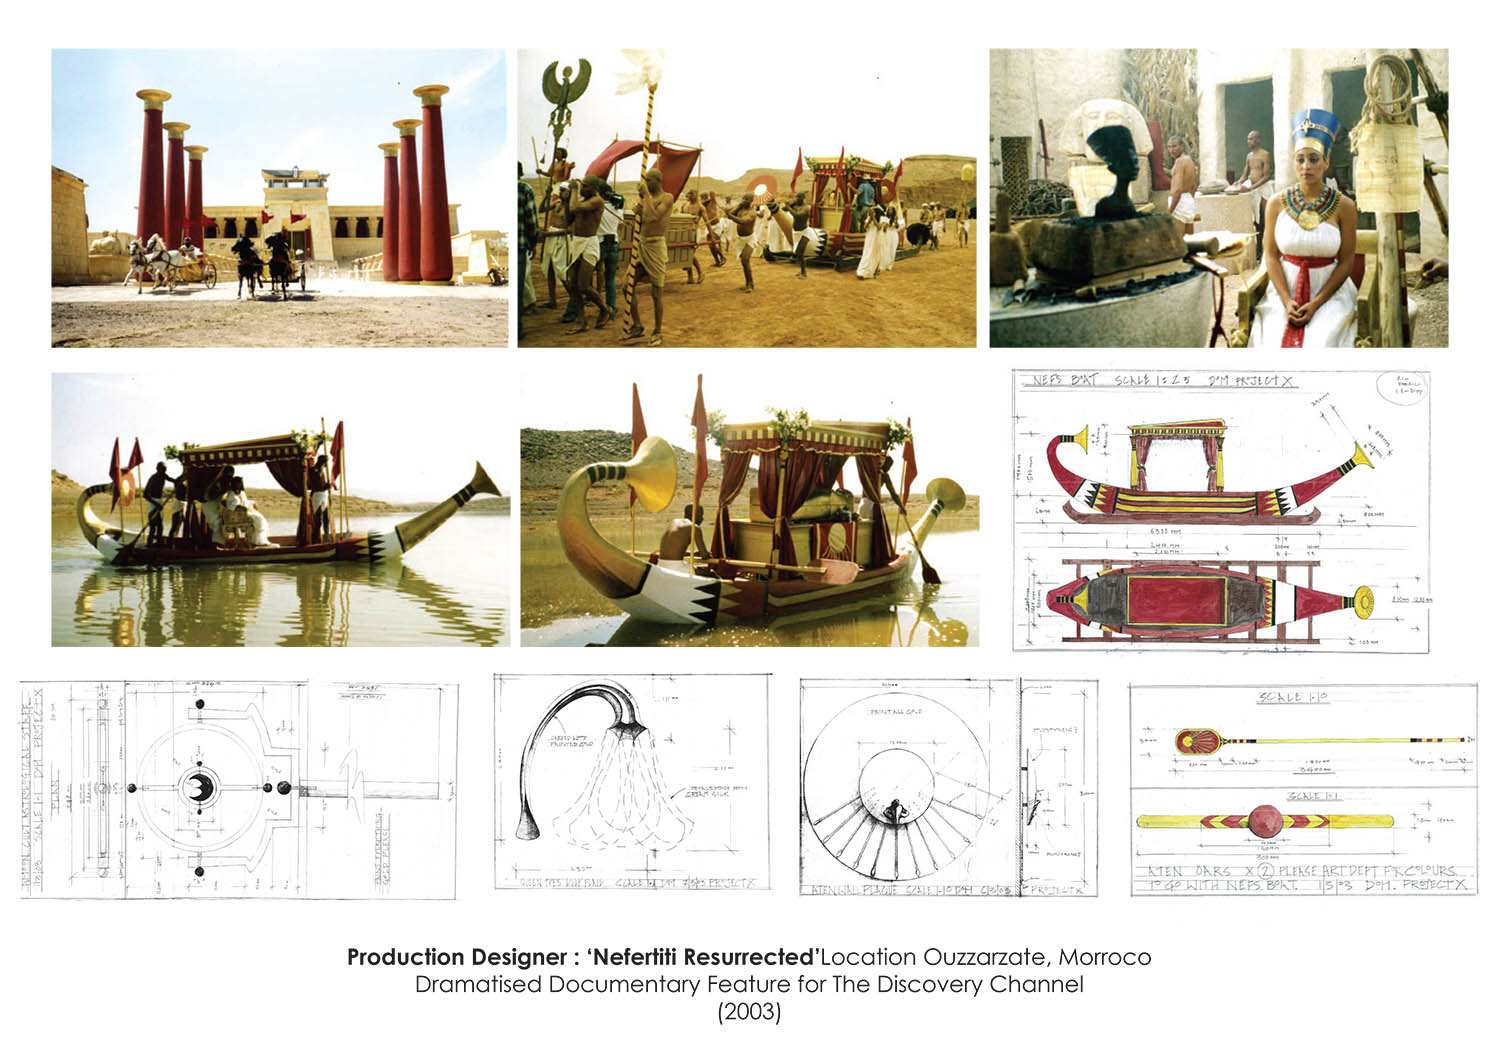 Production design by Dominic Hyman for Nefertiti